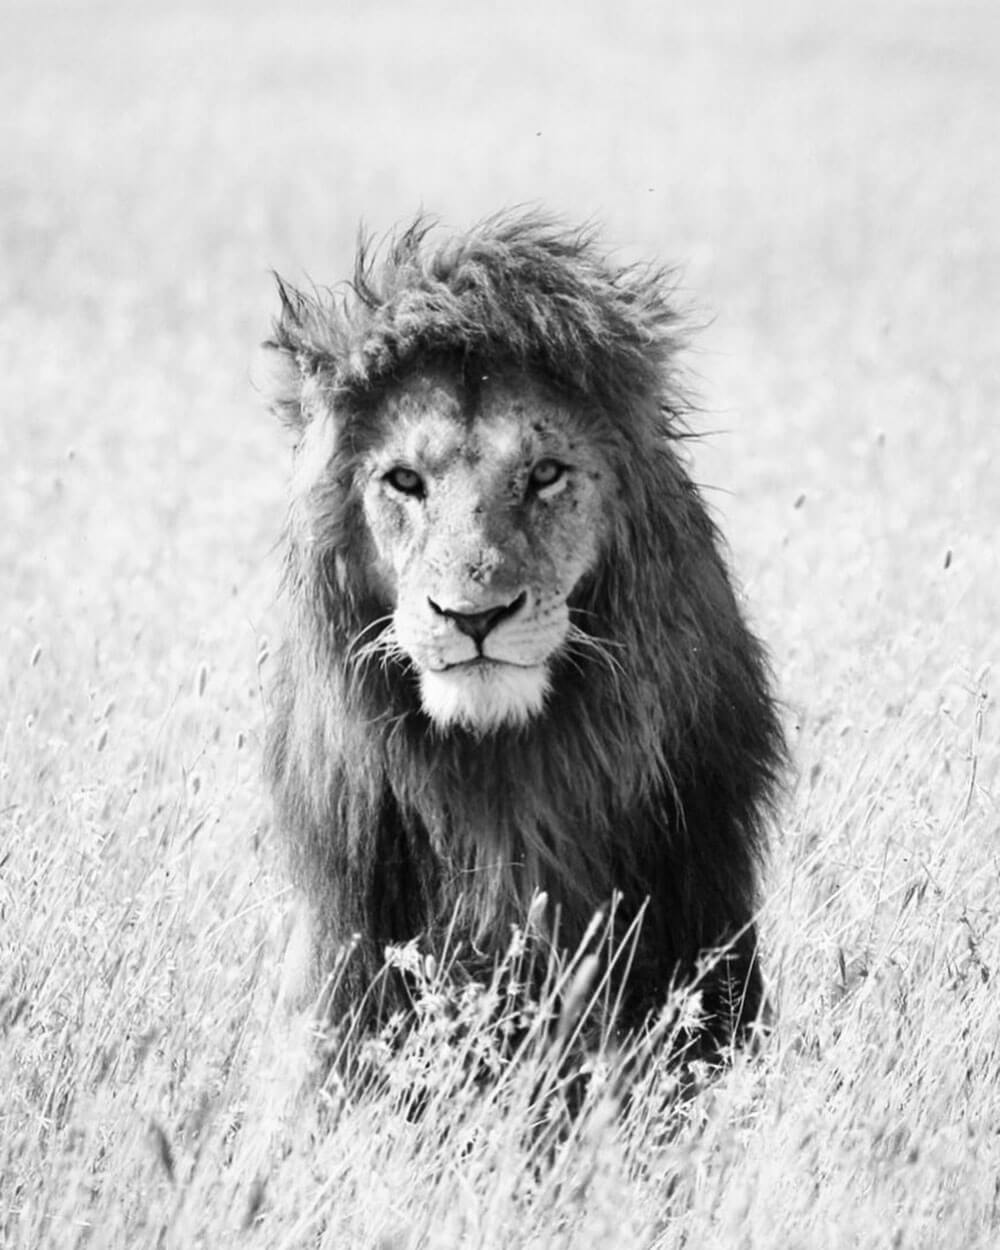 Black and white portrait image of Lion